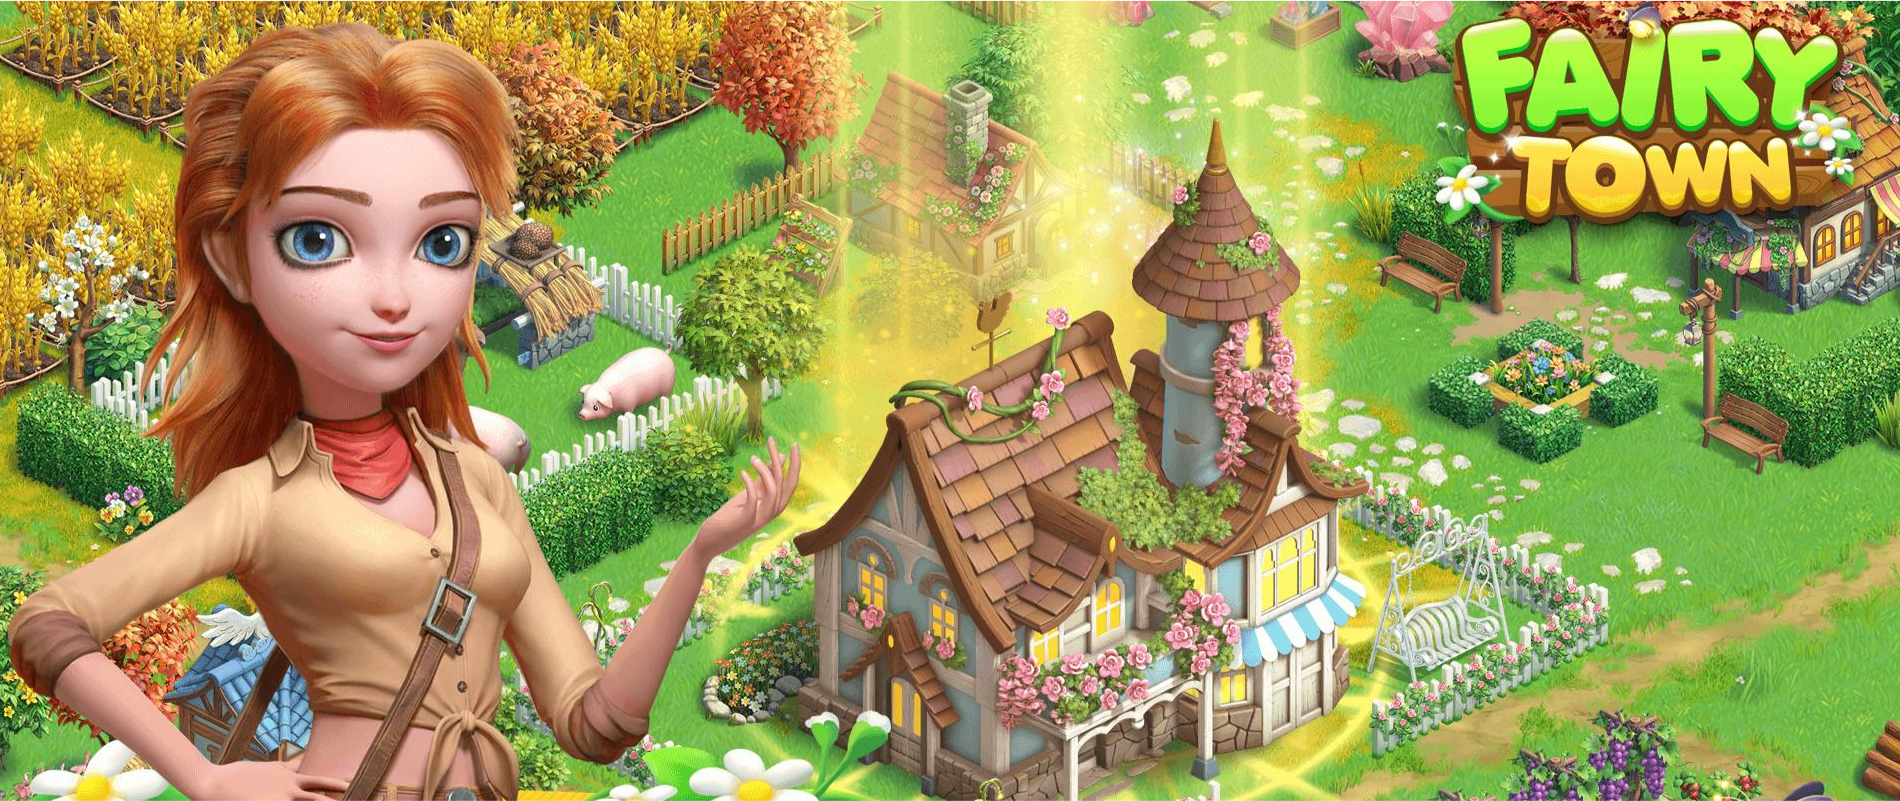 case-study-mana-games-fairy-town